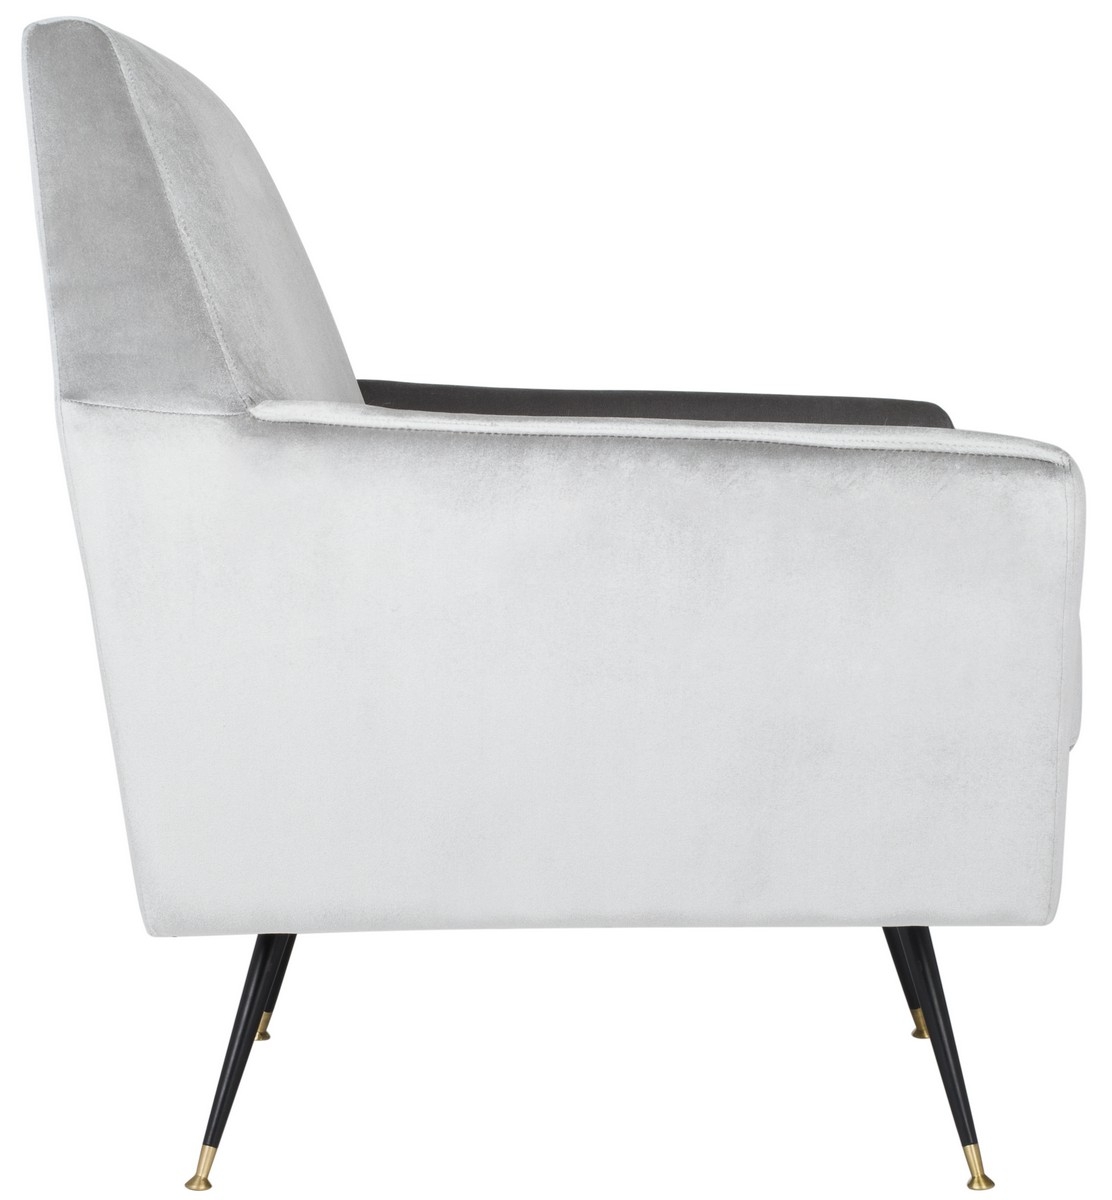 Nynette Velvet Retro Mid Century Accent Chair -  Light Grey - Arlo Home - Image 2